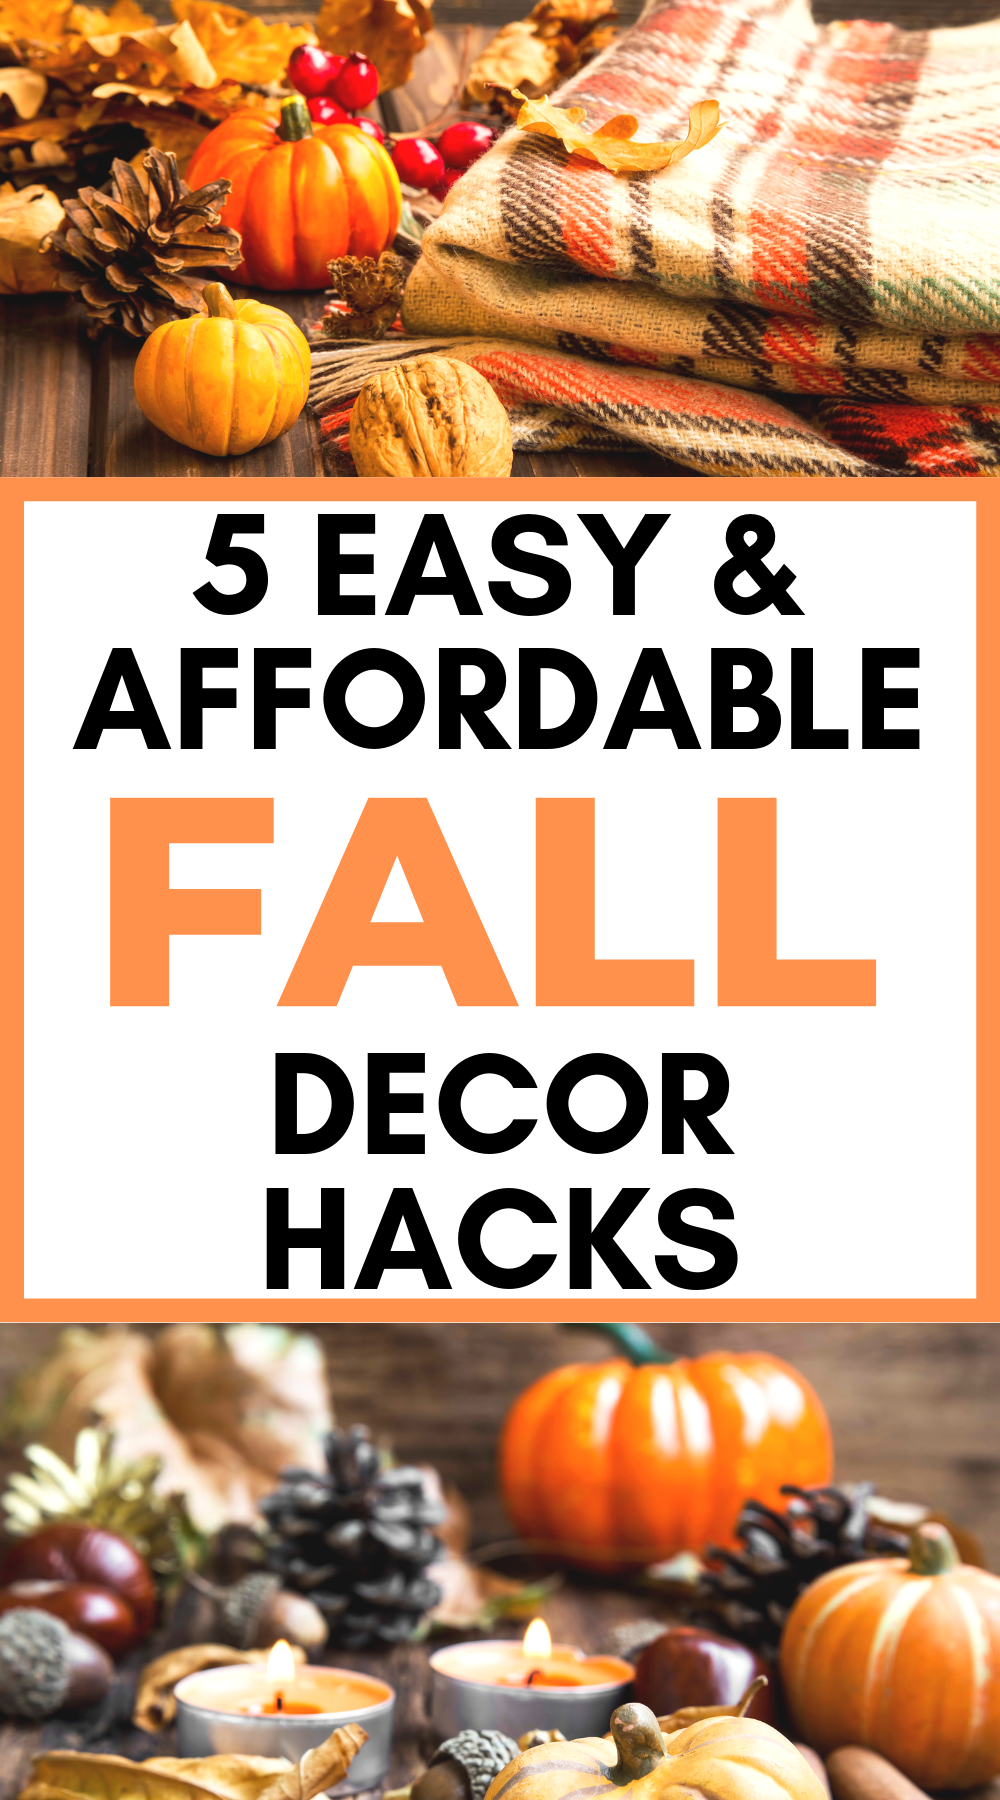 5 Easy Fall Decor Ideas